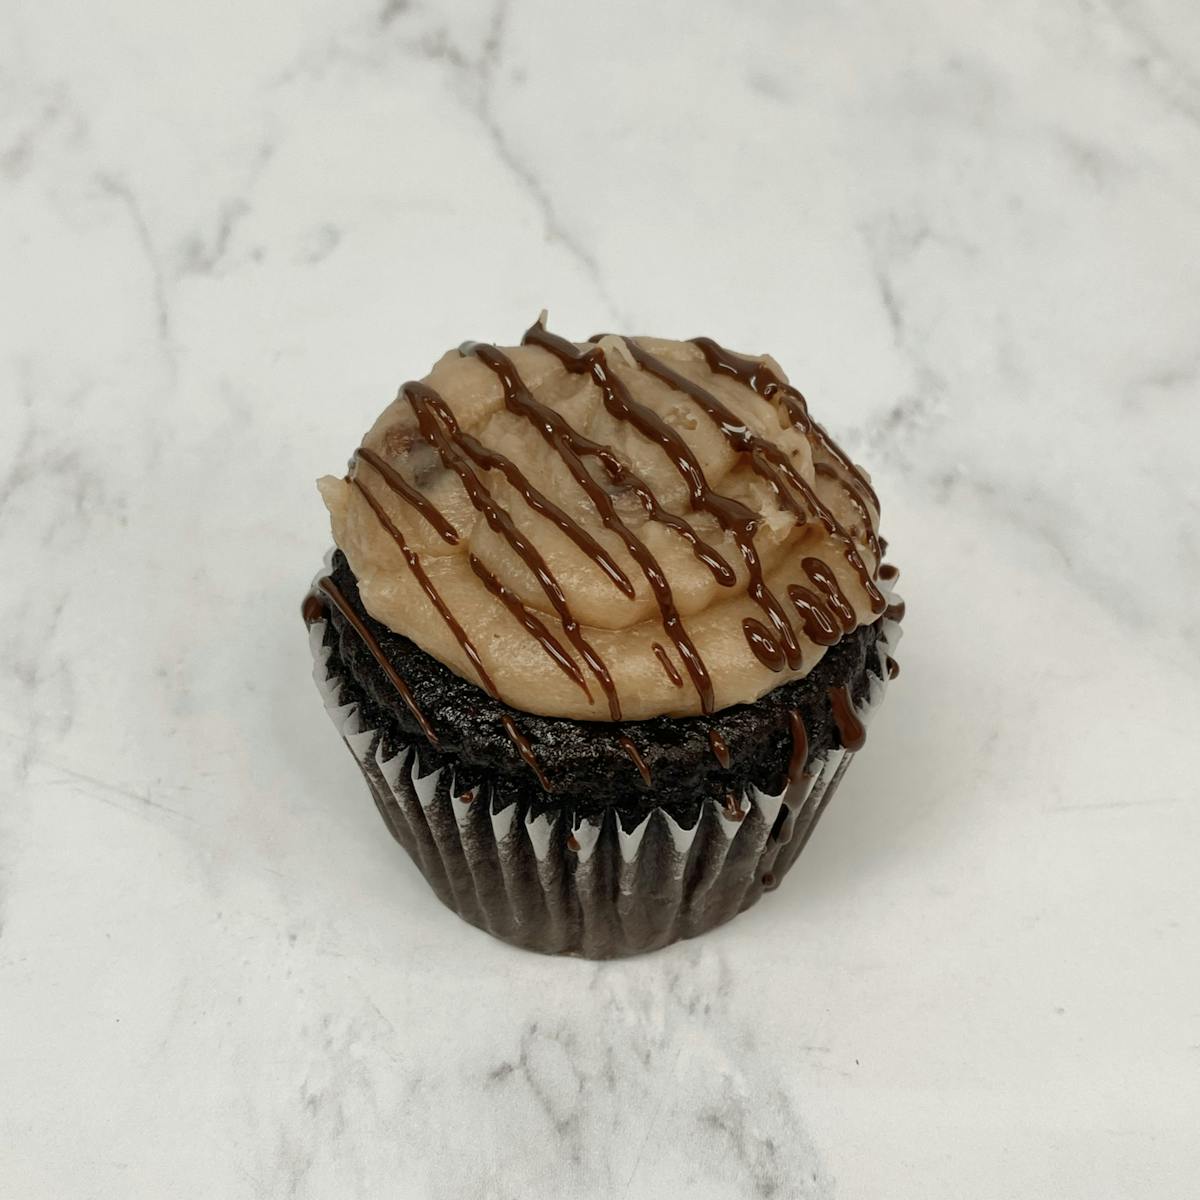 a dark chocolate cupcake